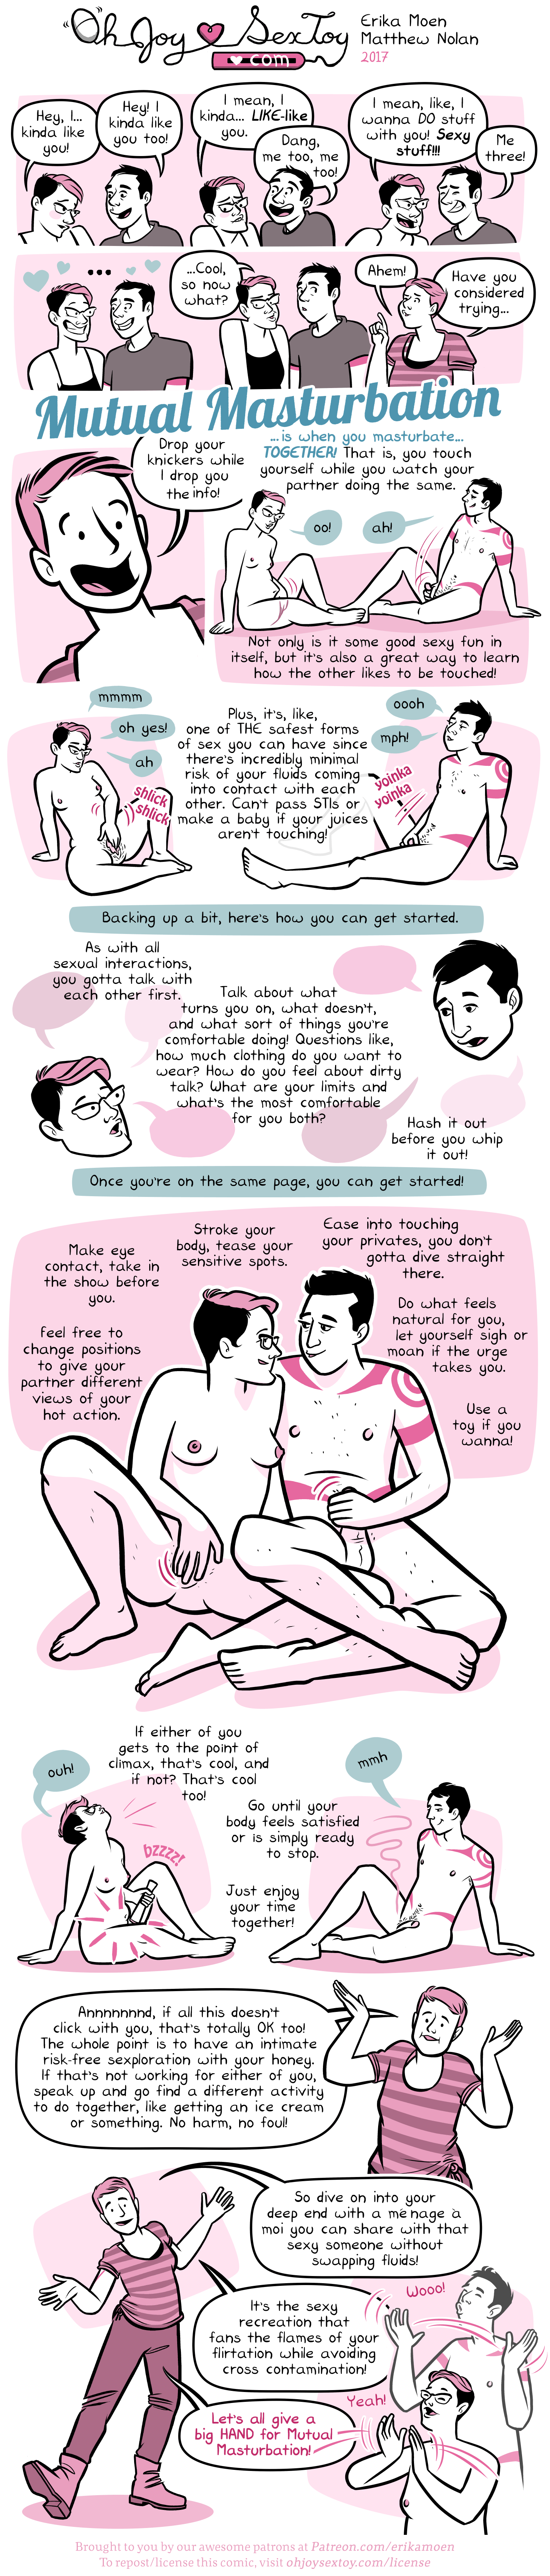 Group masturbation porn comics